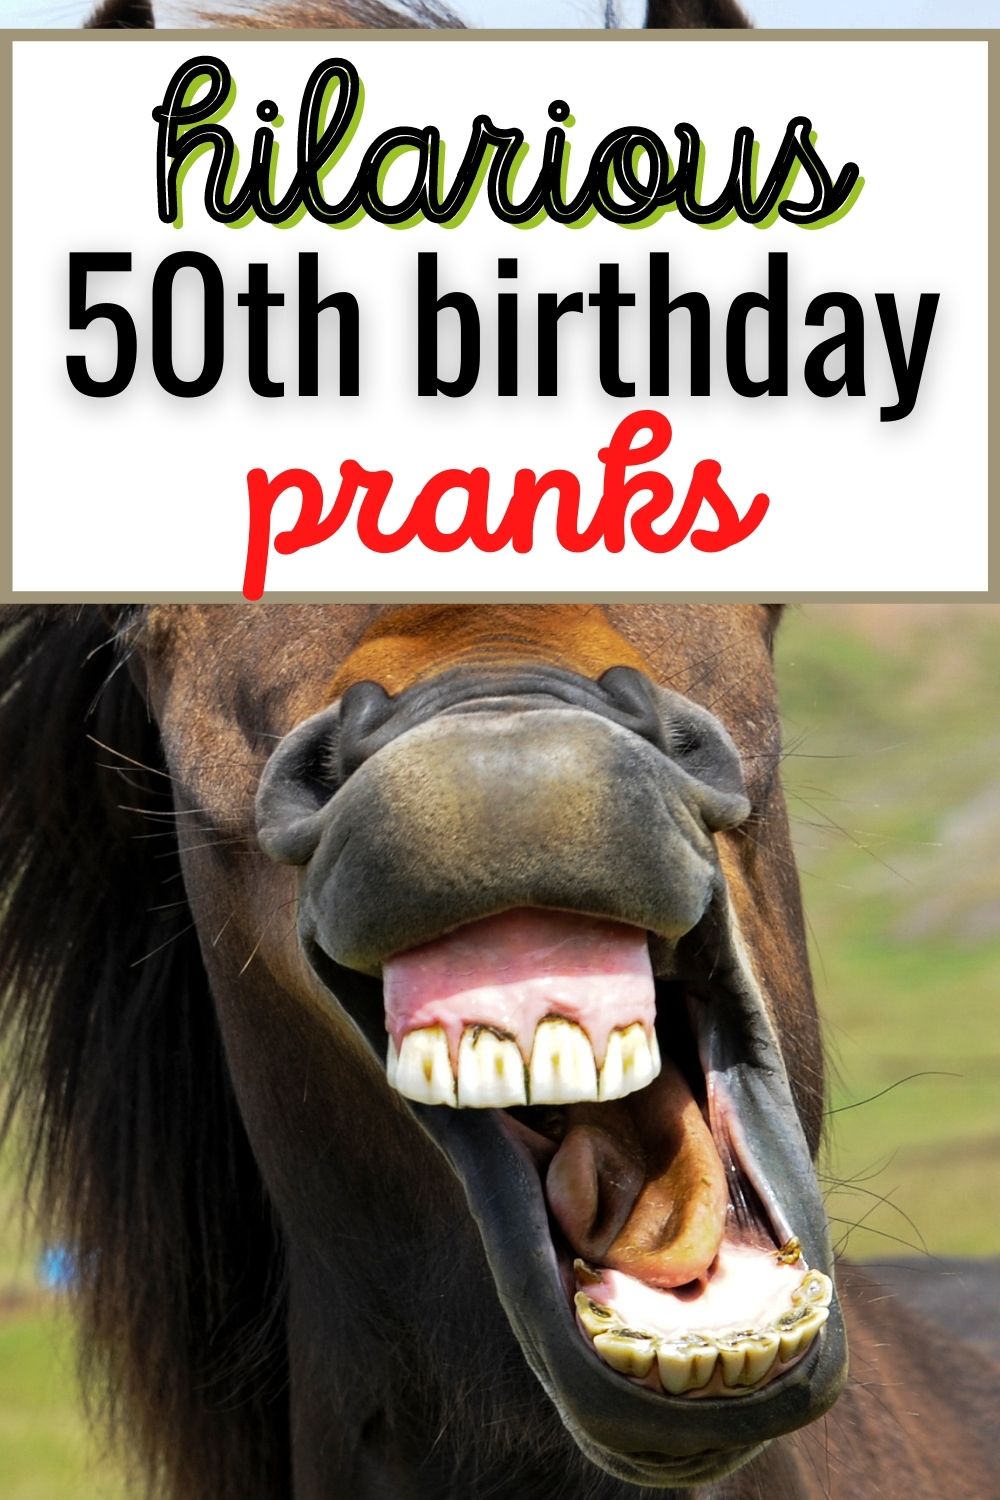 Hilarious 50th birthday pranks